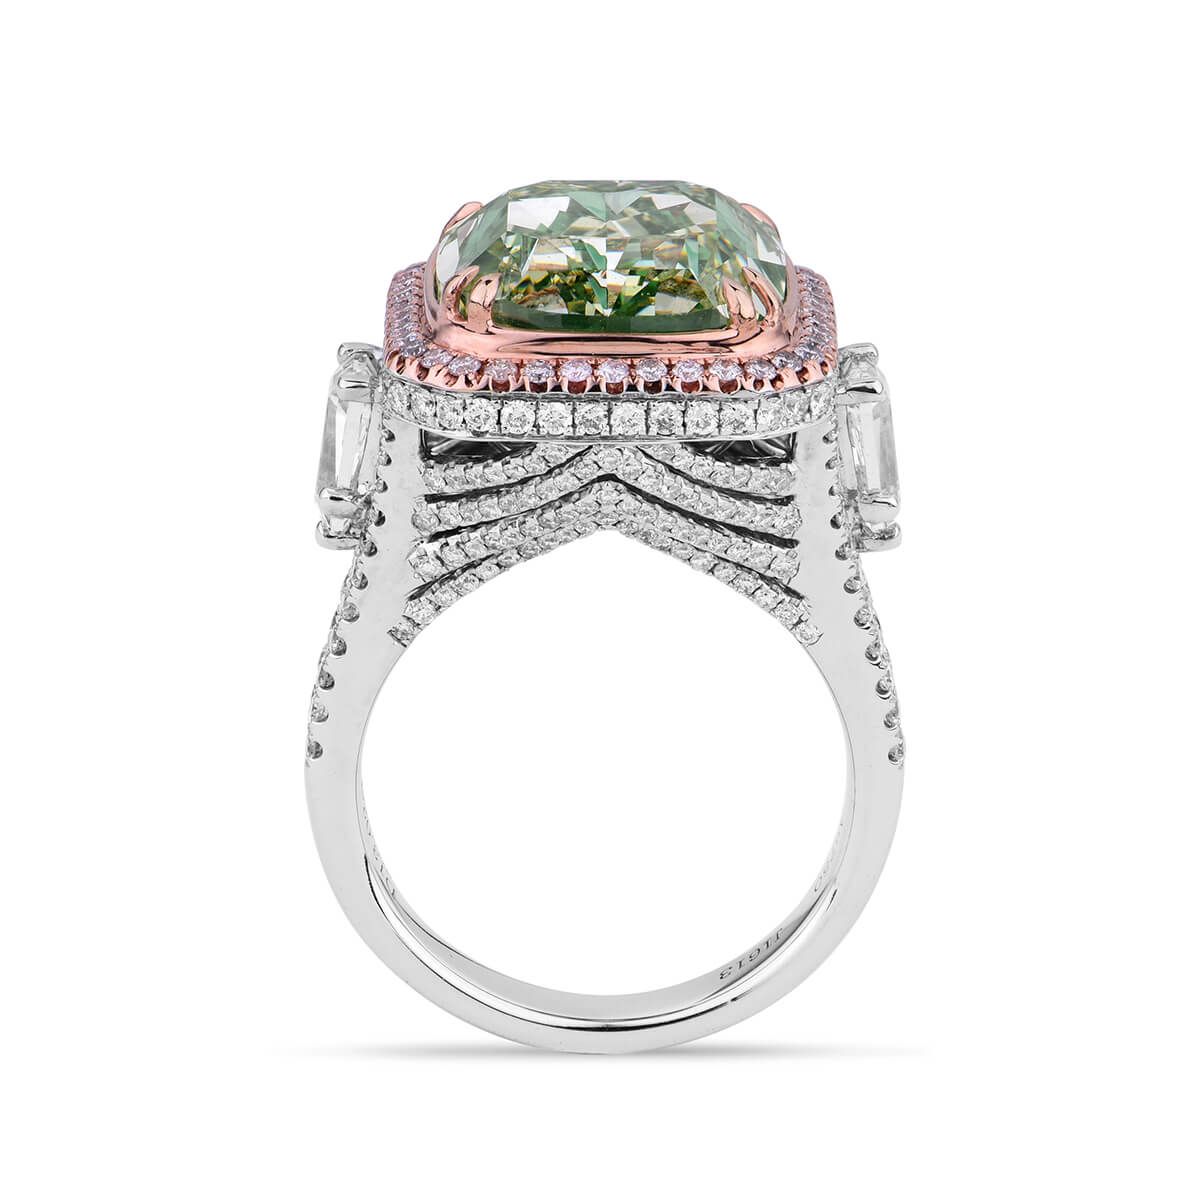 Fancy Grayish Greenish Yellow Diamond Ring, 15.36 Ct. TW, Cushion shape, GIA Certified, 5192163522